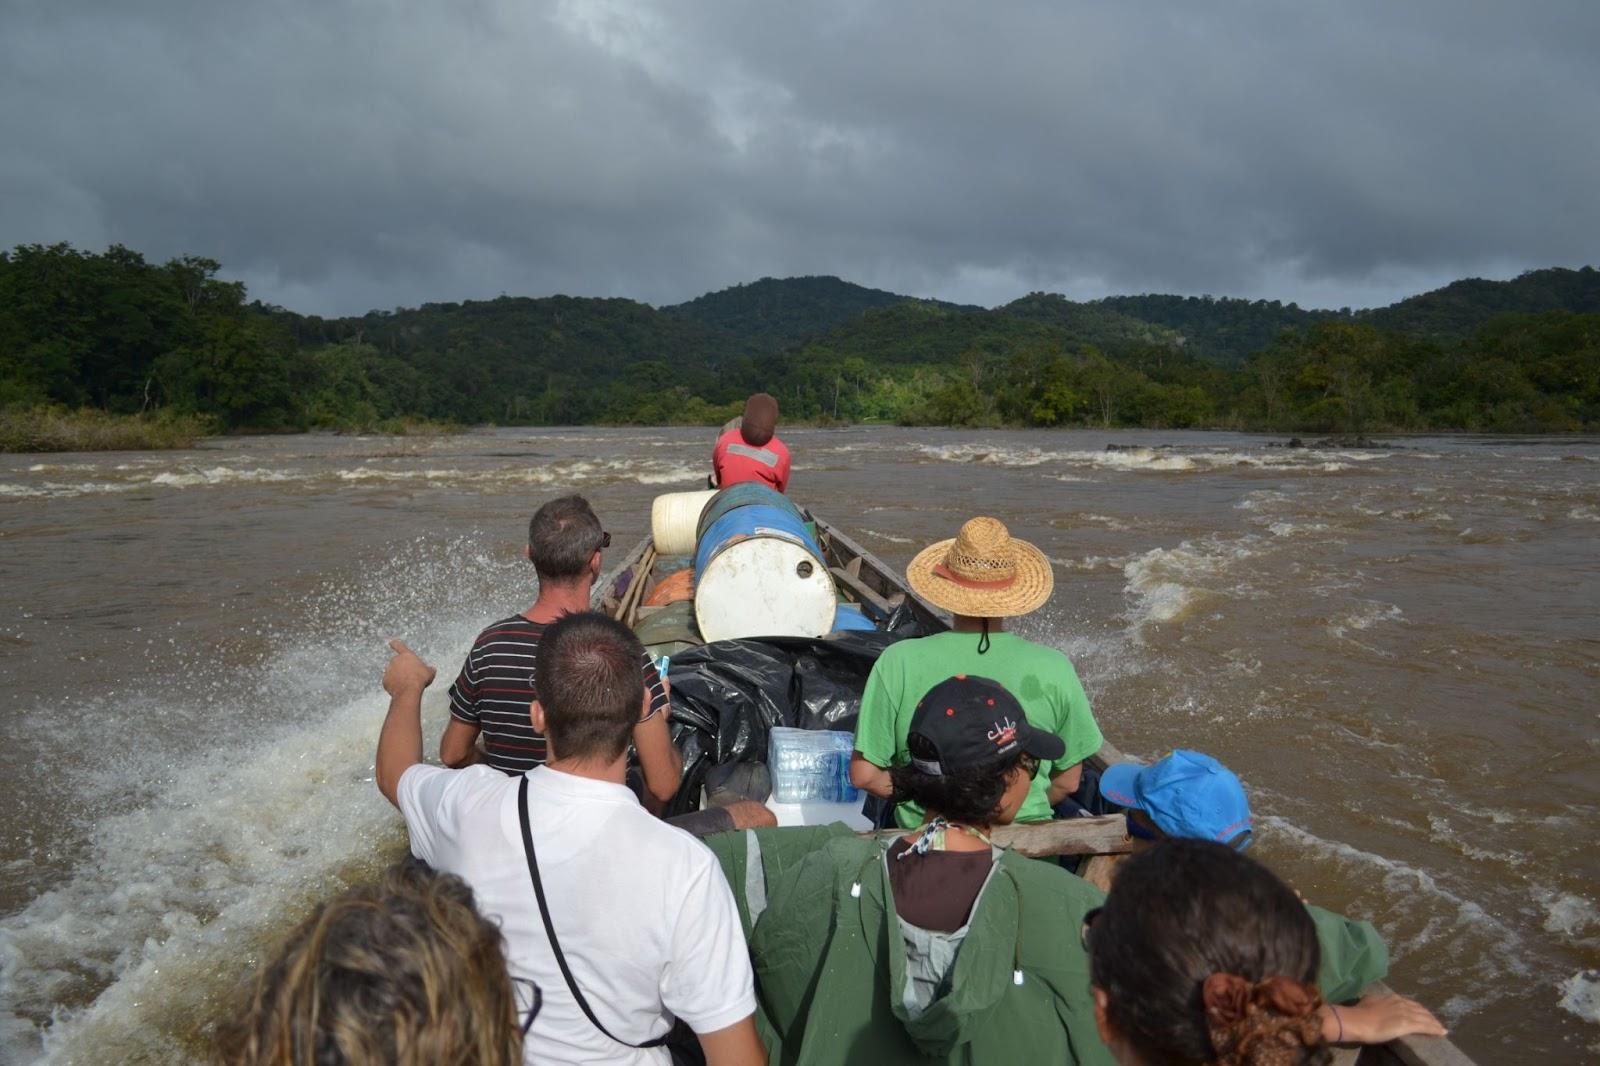 a boat trip with tourists on the way to warapoka village, guyana